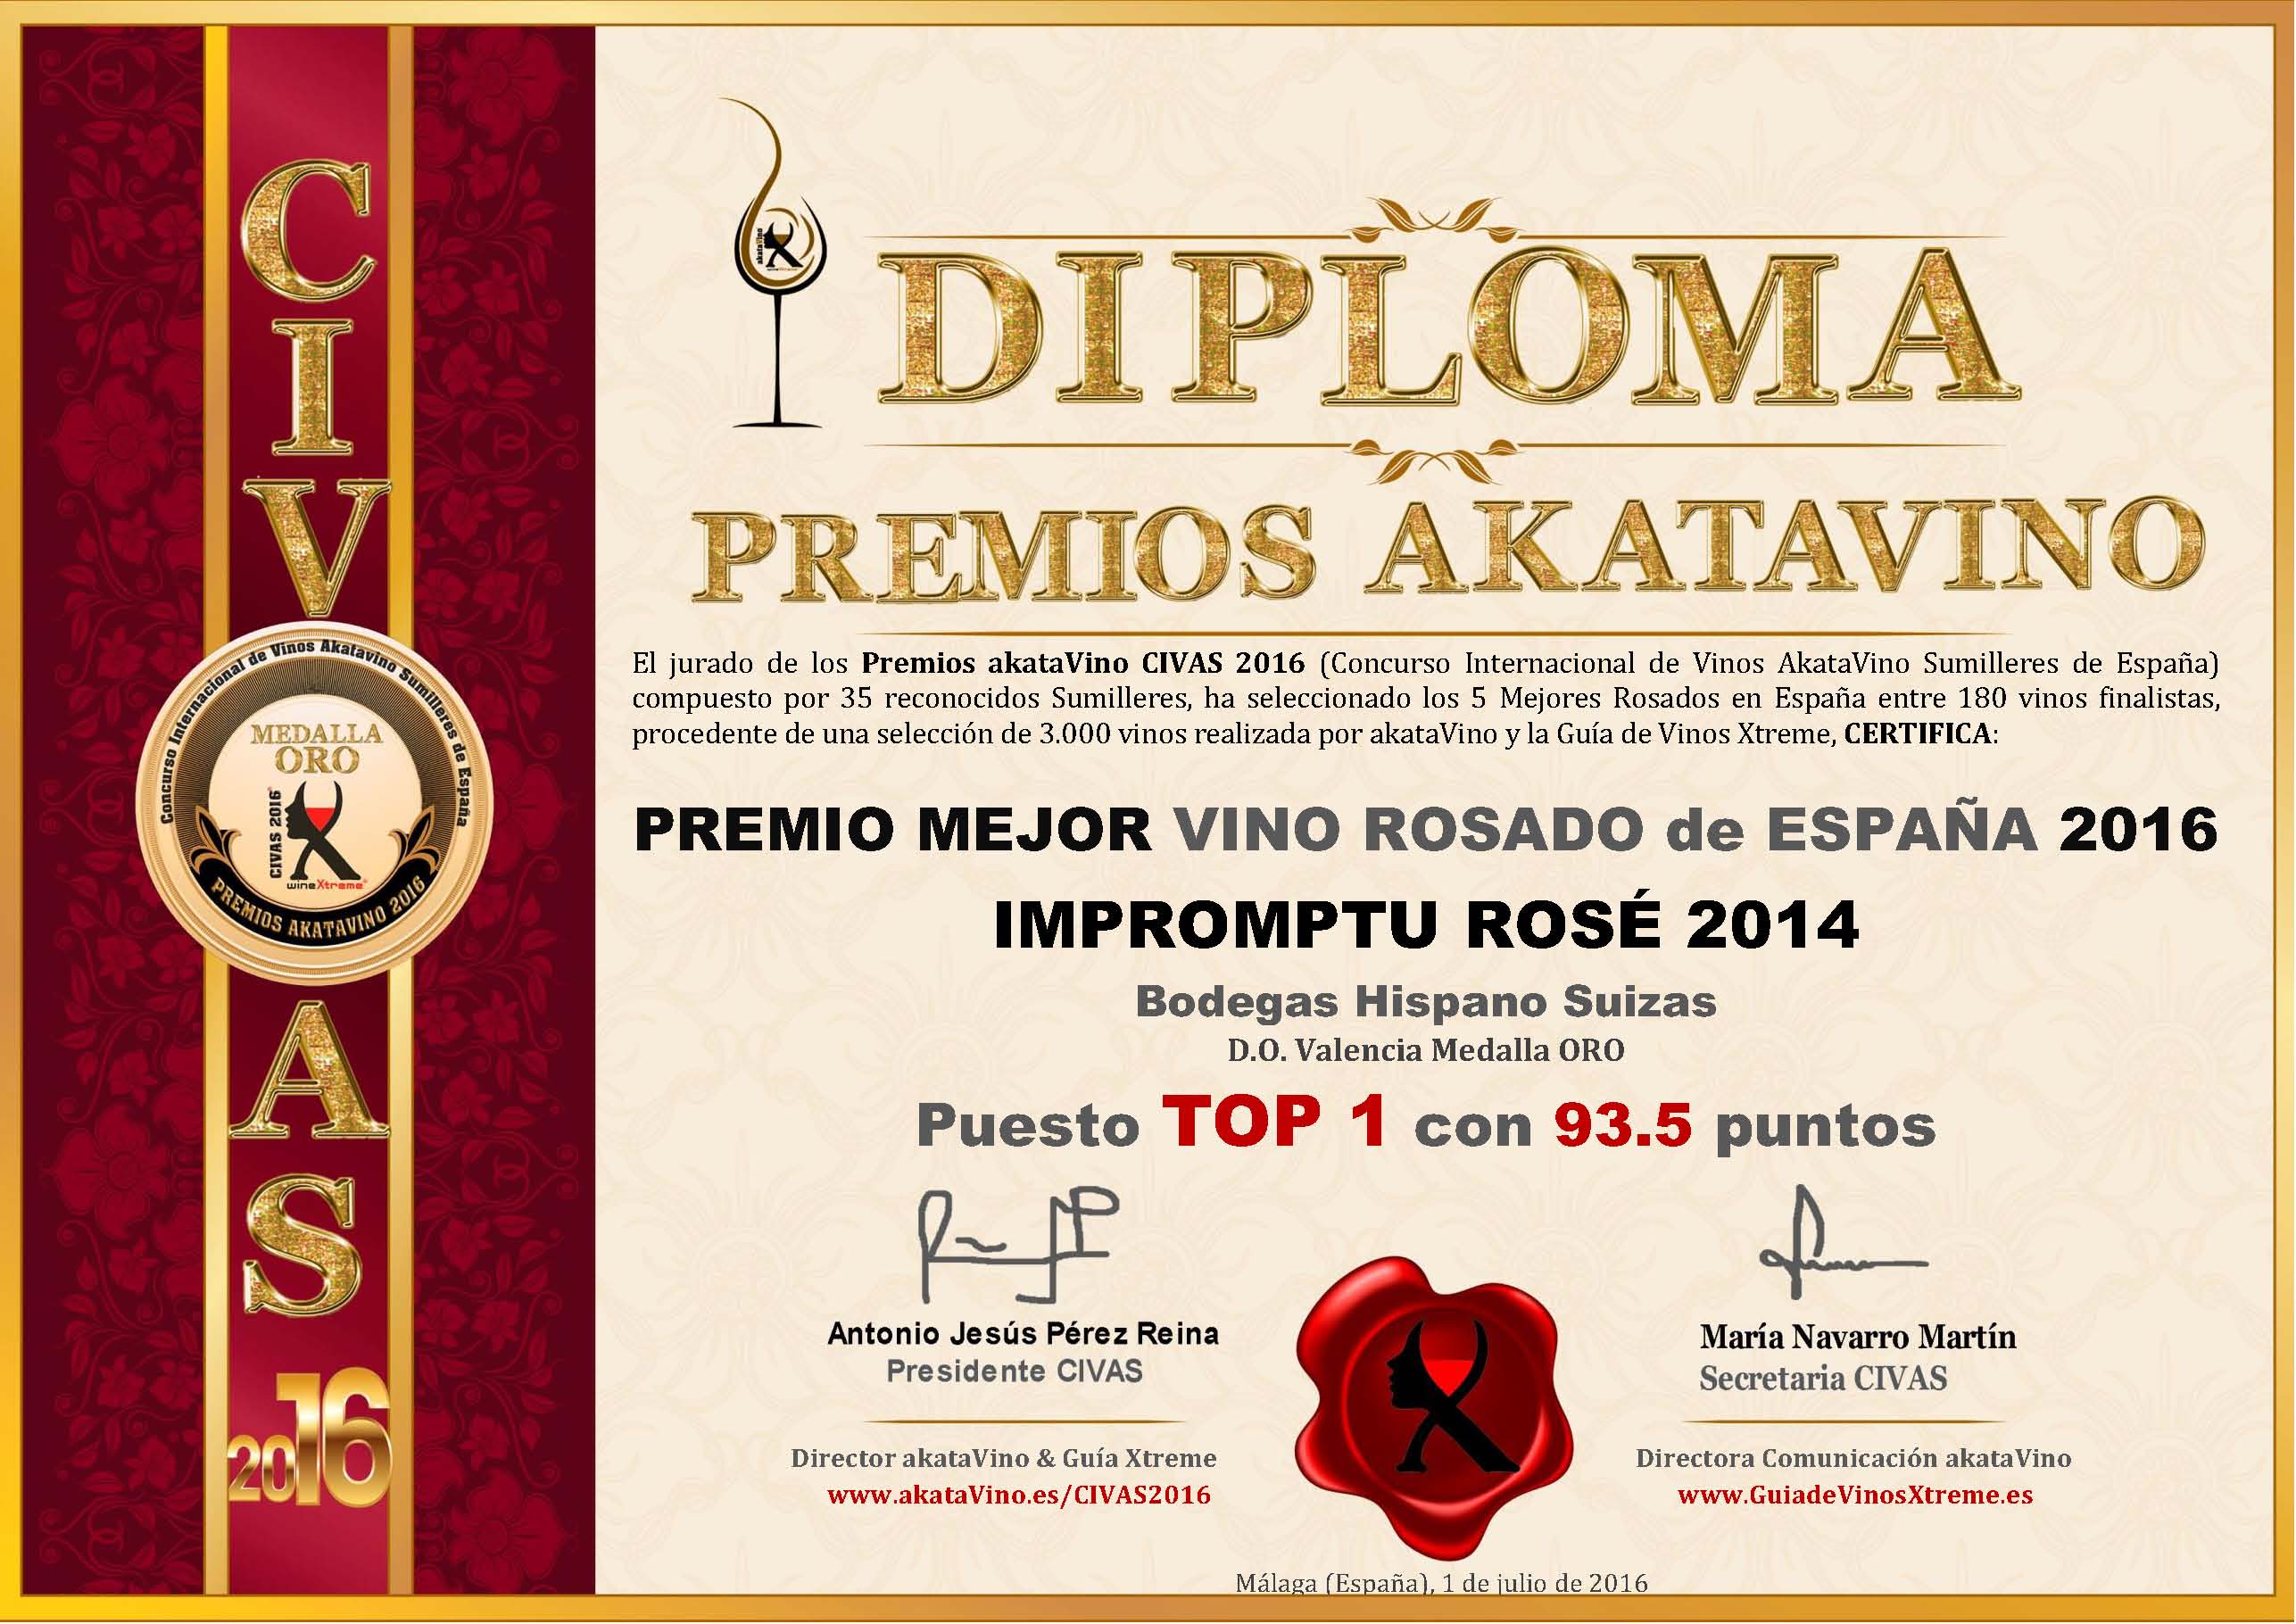 Impromptu rose 2014 TOP 1 Mejor Rosado de España 2016 © Ranking AkataVino (1)